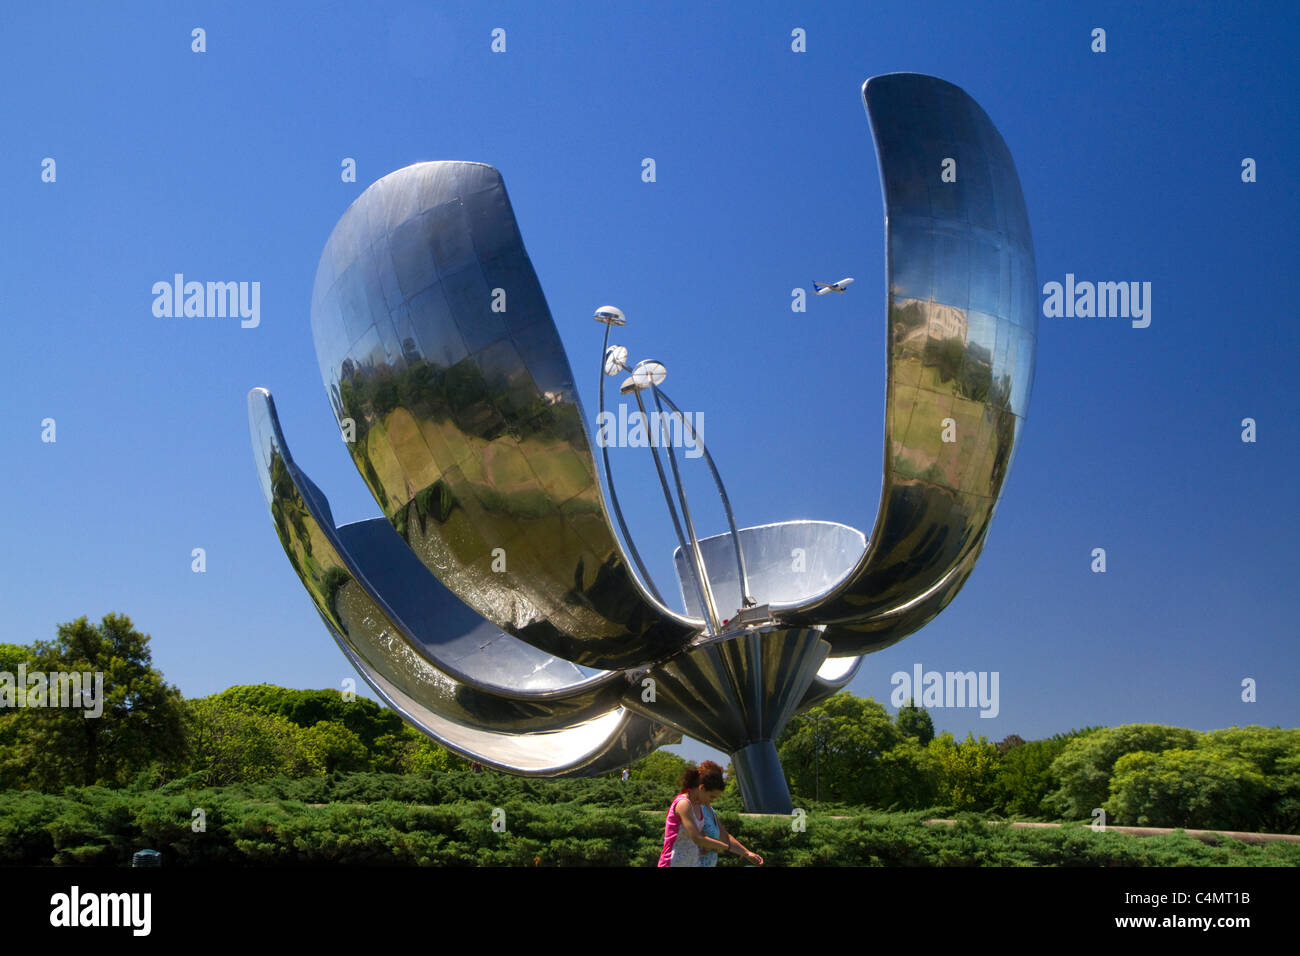 Floralis Generica is a sculpture made of steel and aluminum located in Plaza de las Naciones Unidas in Buenos Aires, Argentina. Stock Photo